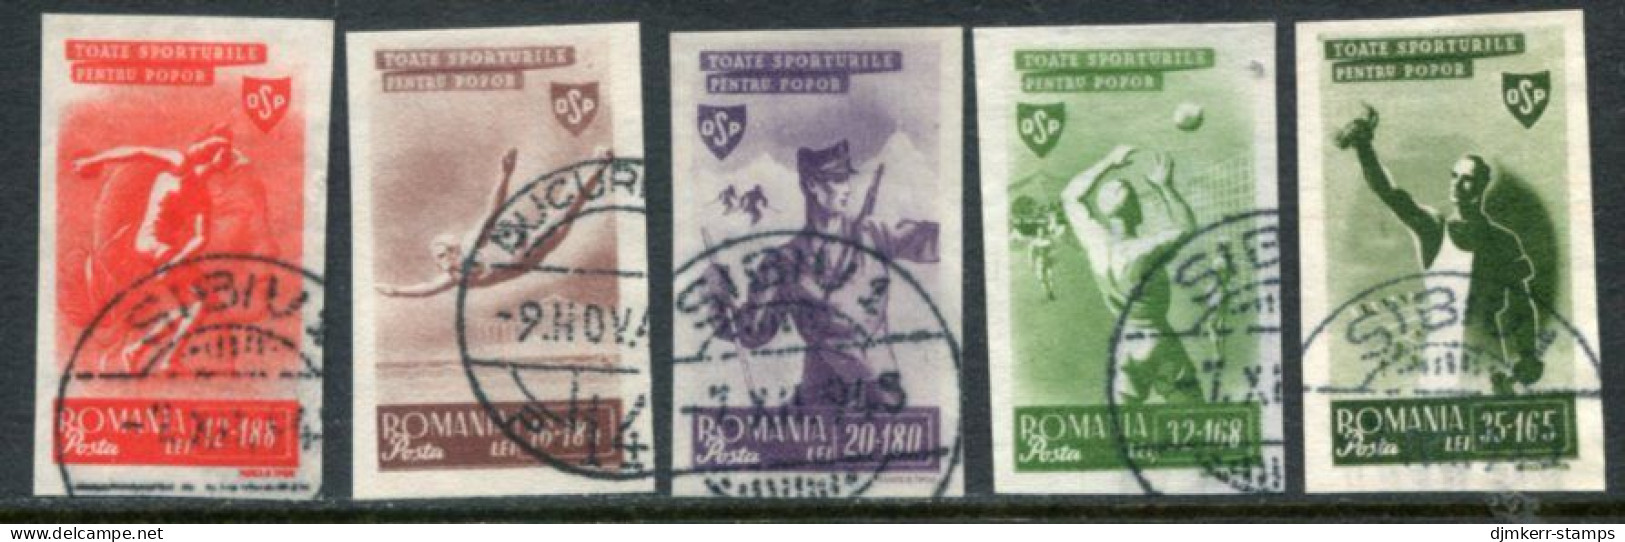 ROMANIA 1945 People's Sport Imperforate Used. Michel 879-83 - Usado